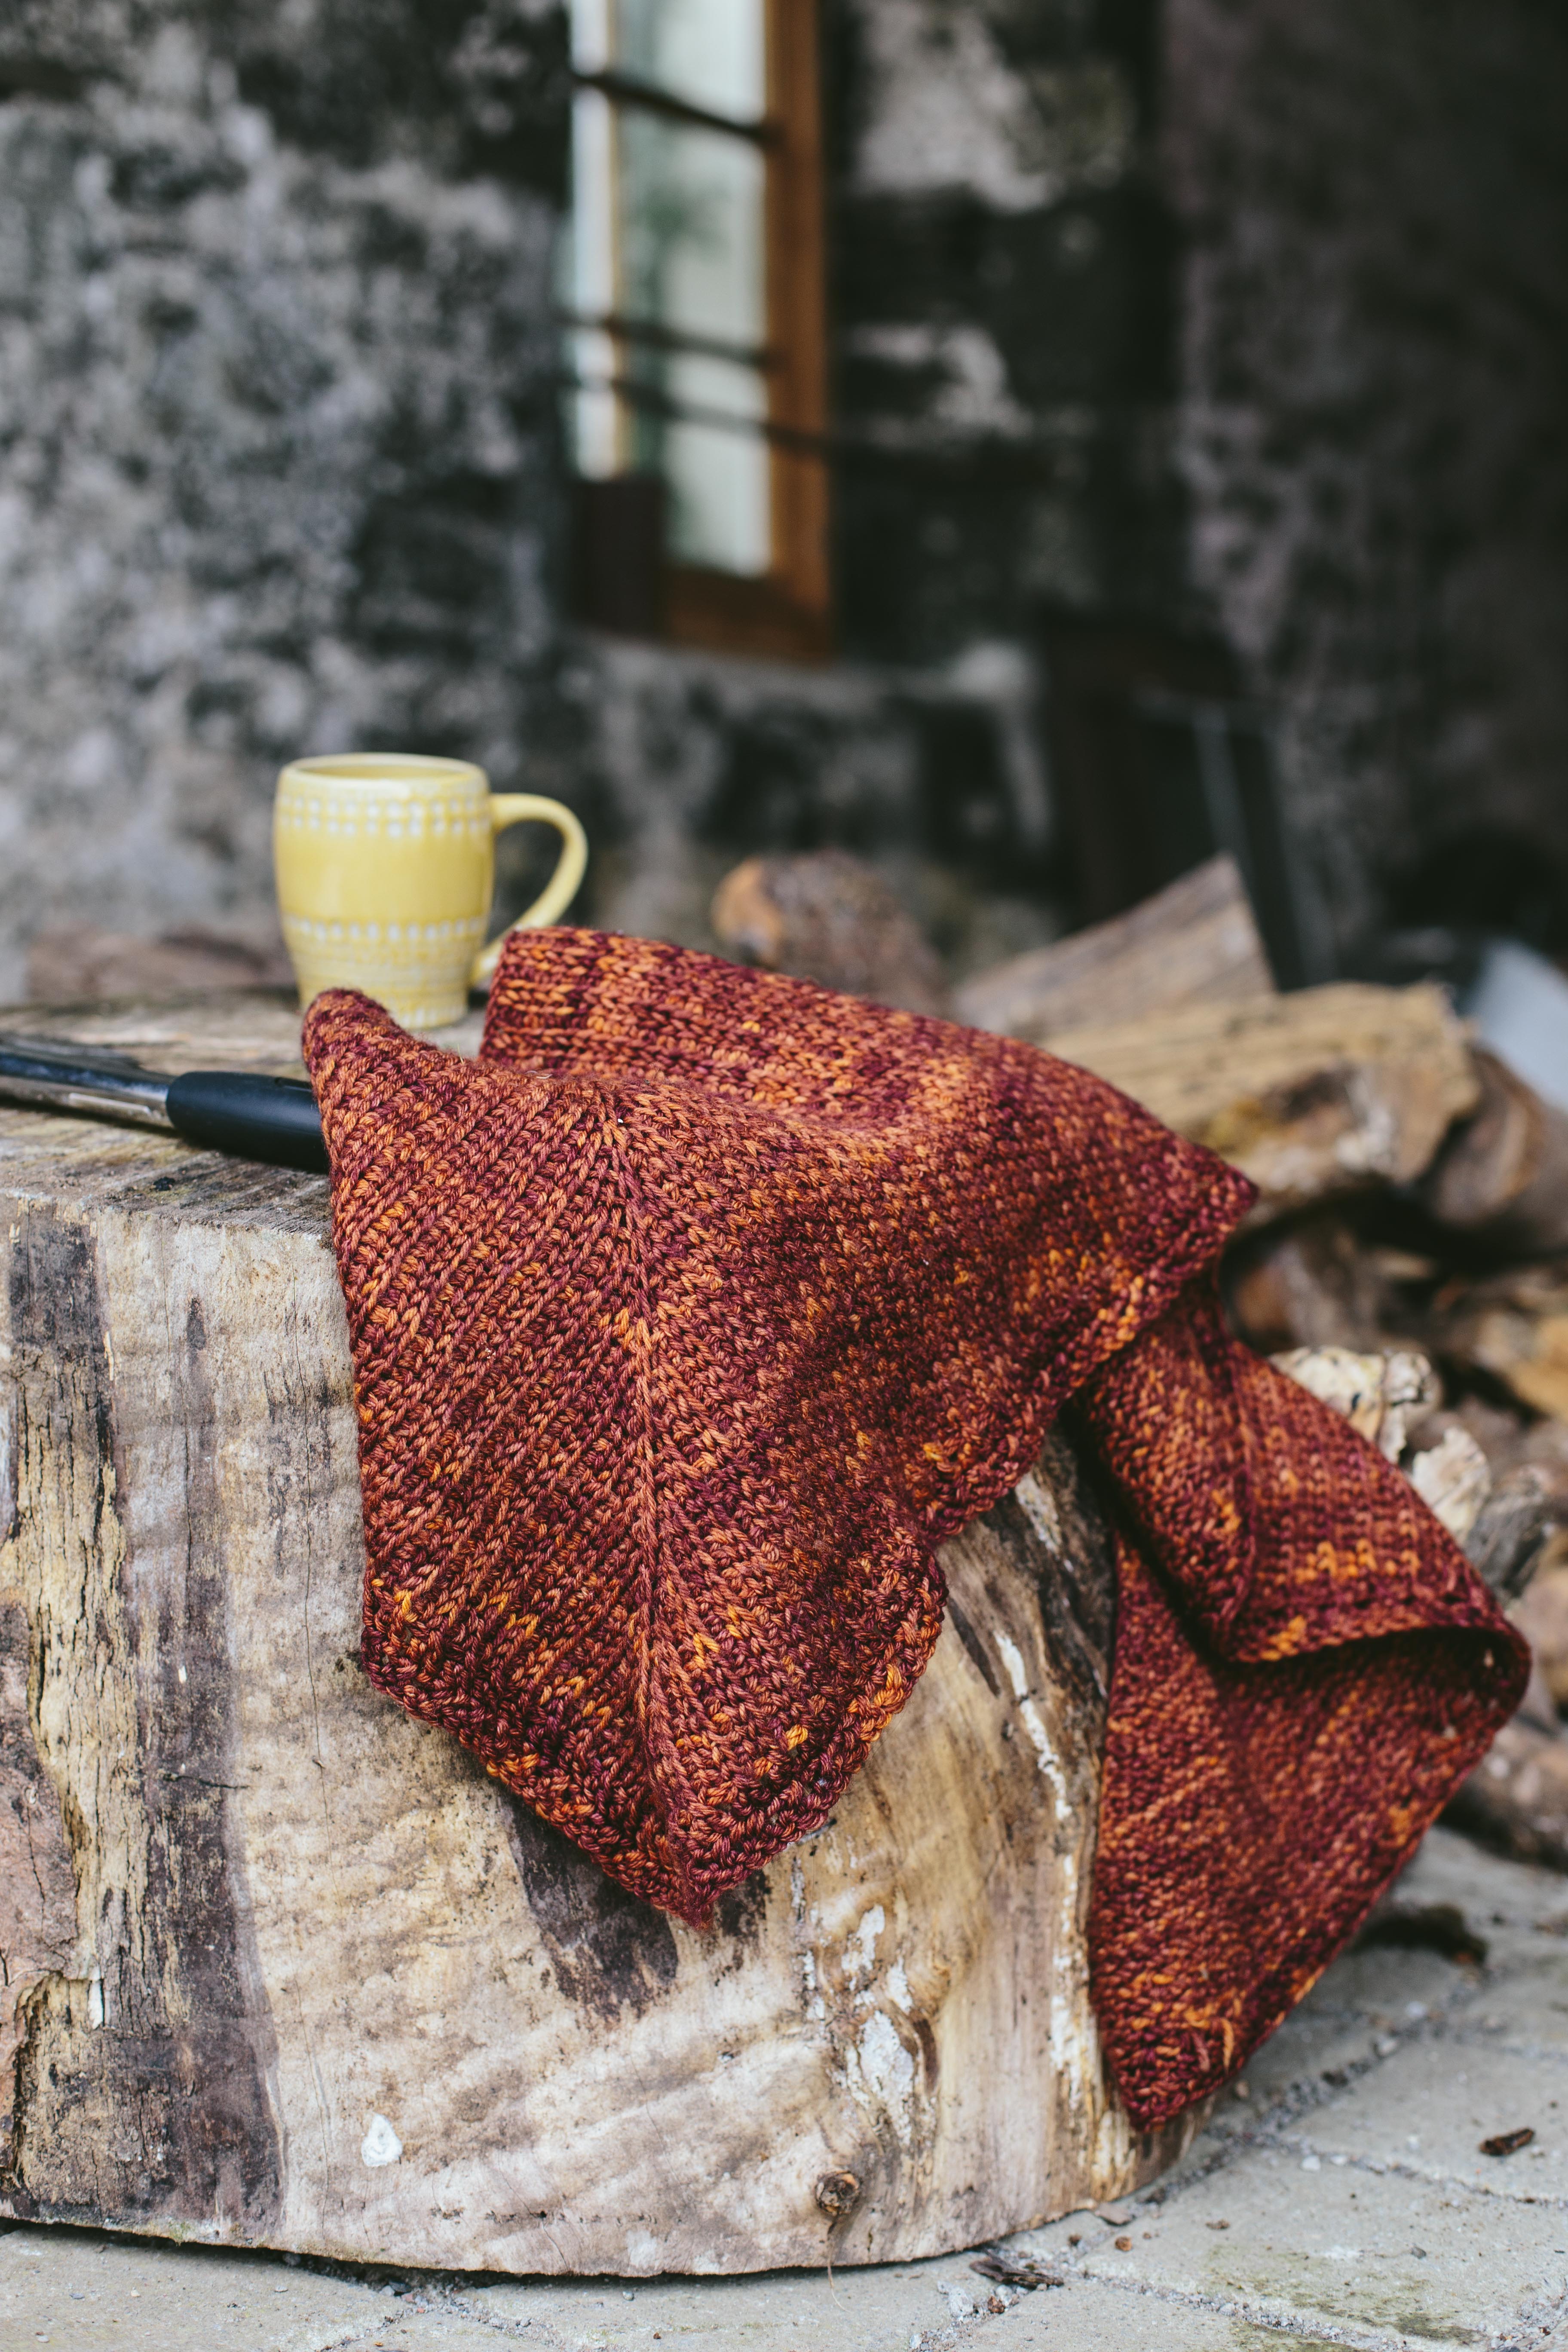 brown crochet shawl sits on a large log with a coffee mug